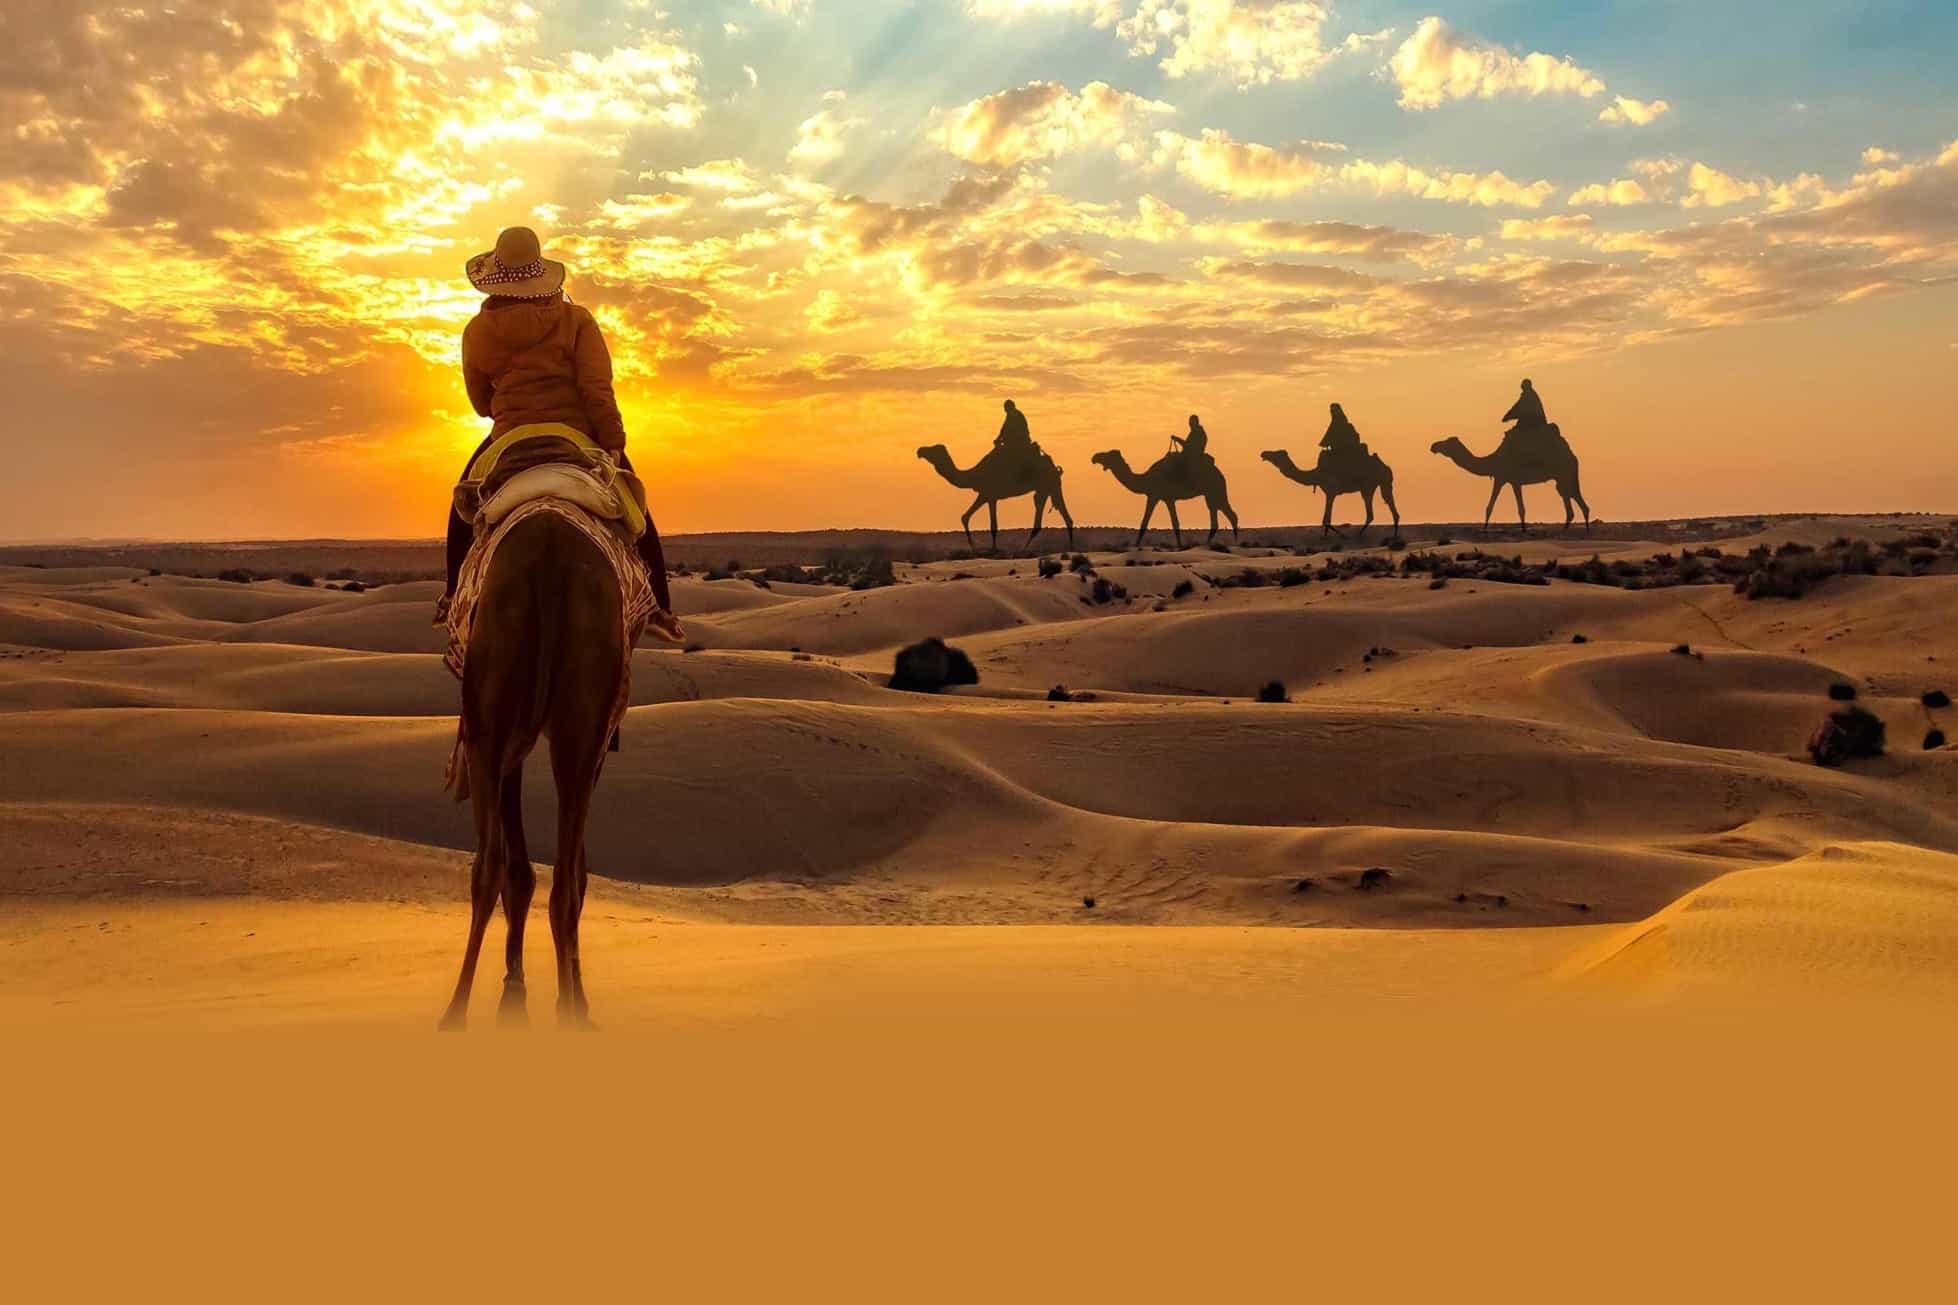 sunrise desert safari abu dhabi